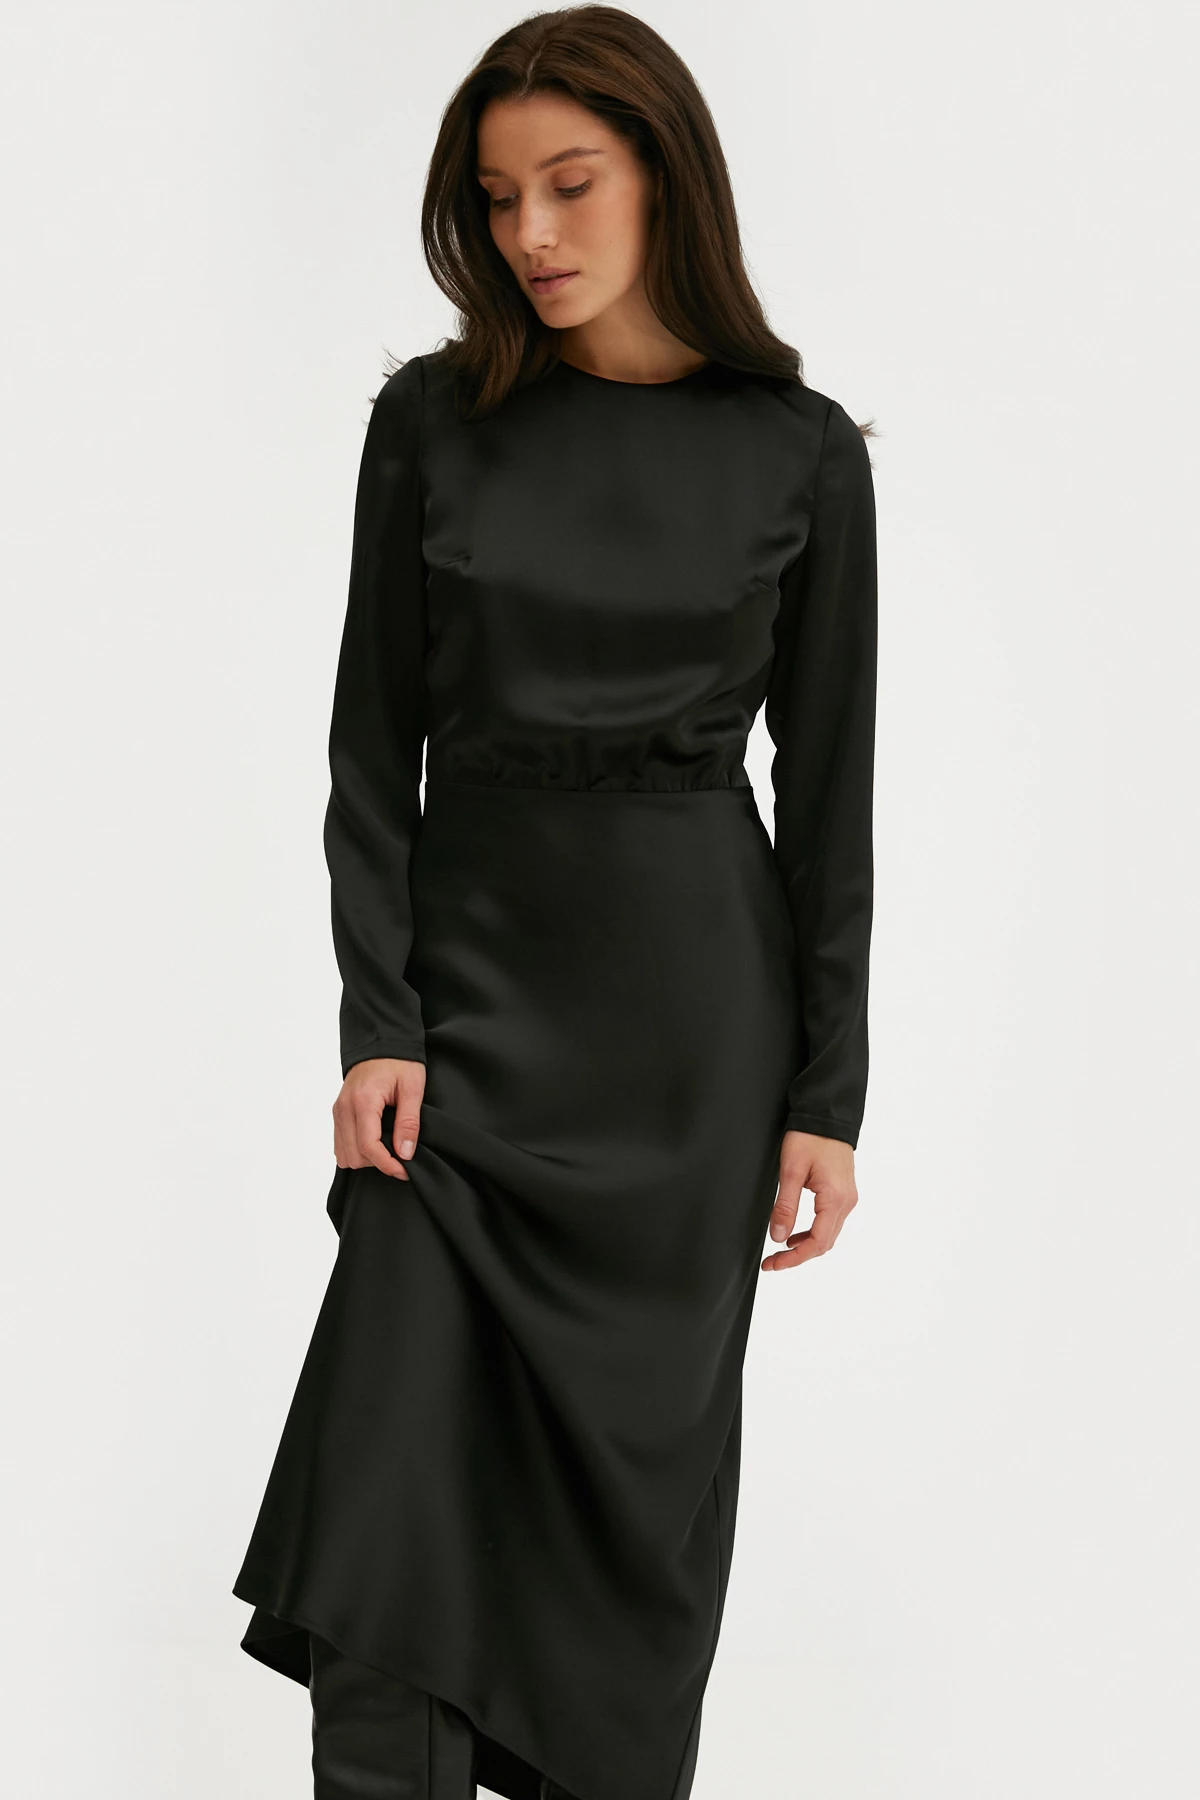 Satin black dress with sleeves, photo 3